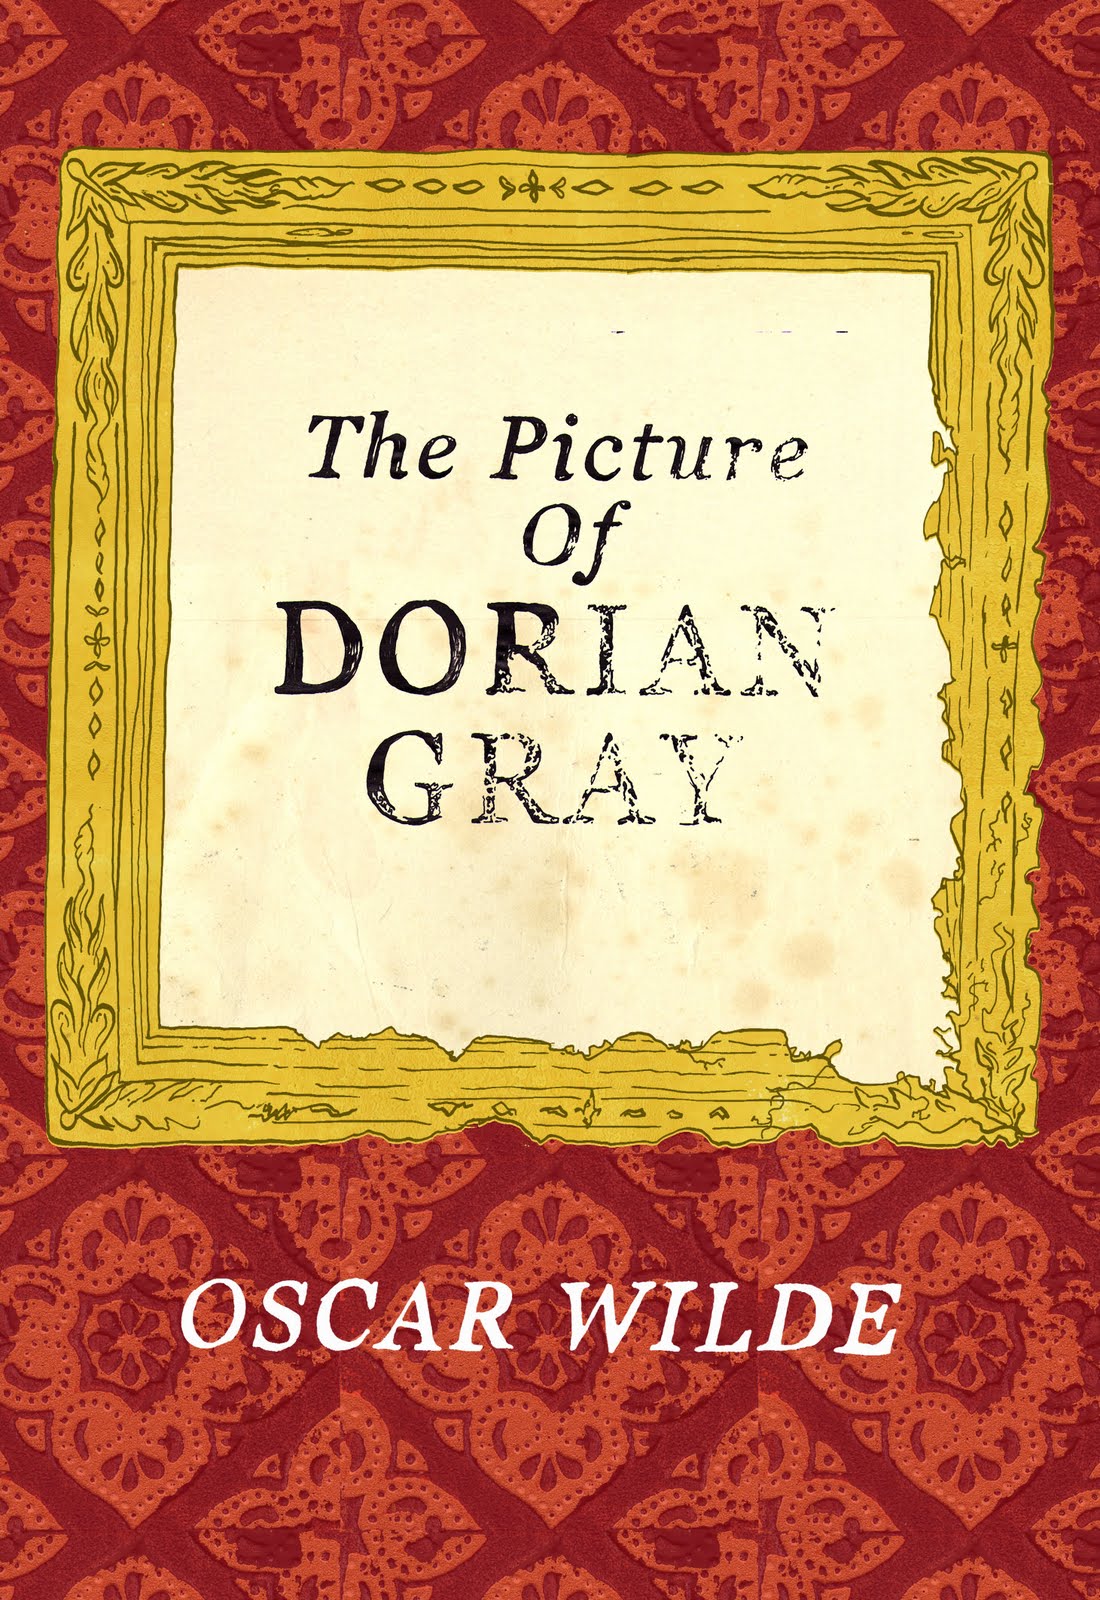 Dorian gray essay introduction